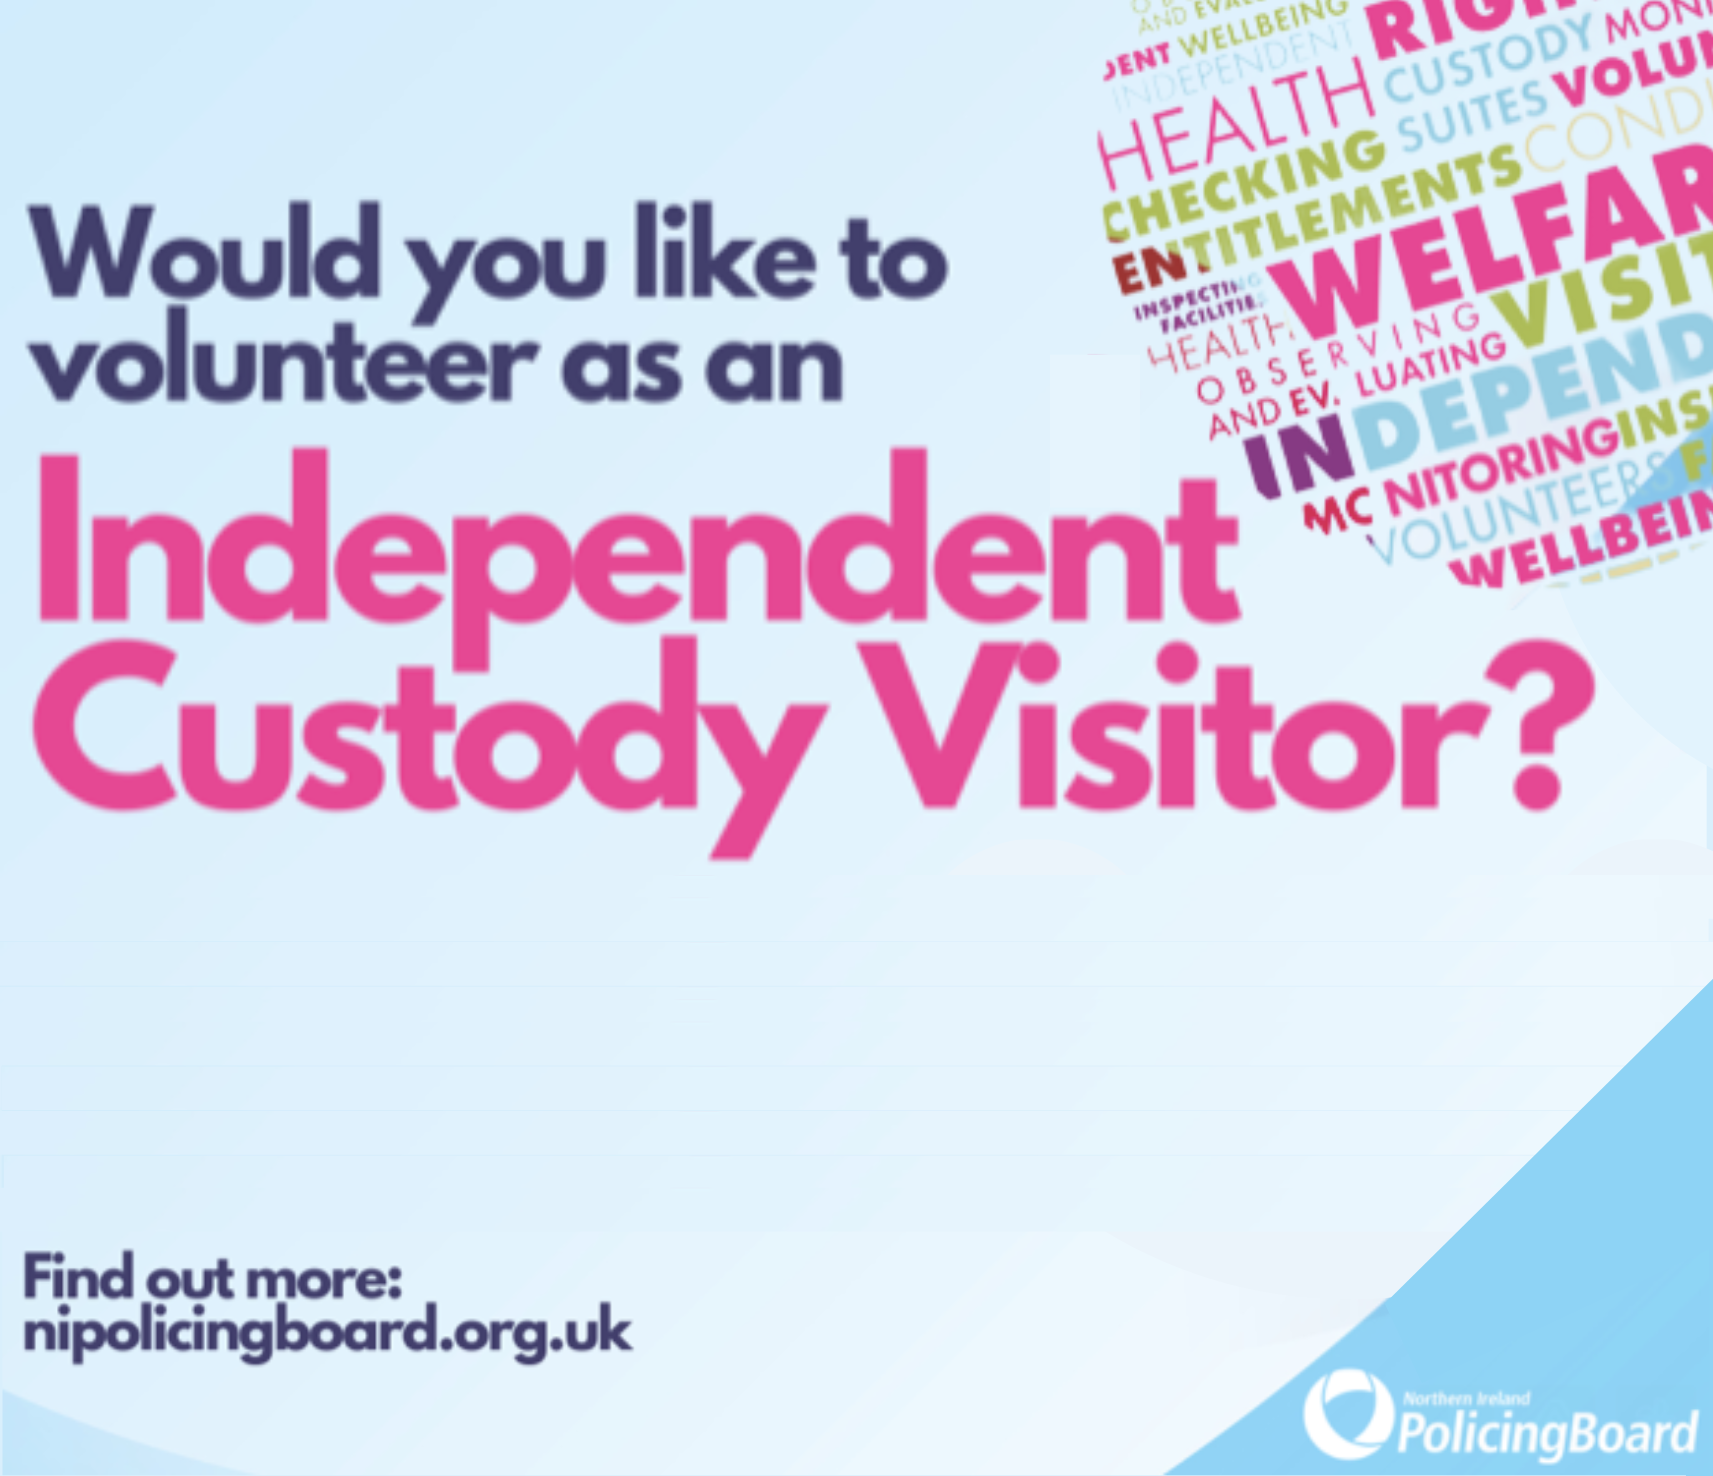 Independent Custody Visitor website